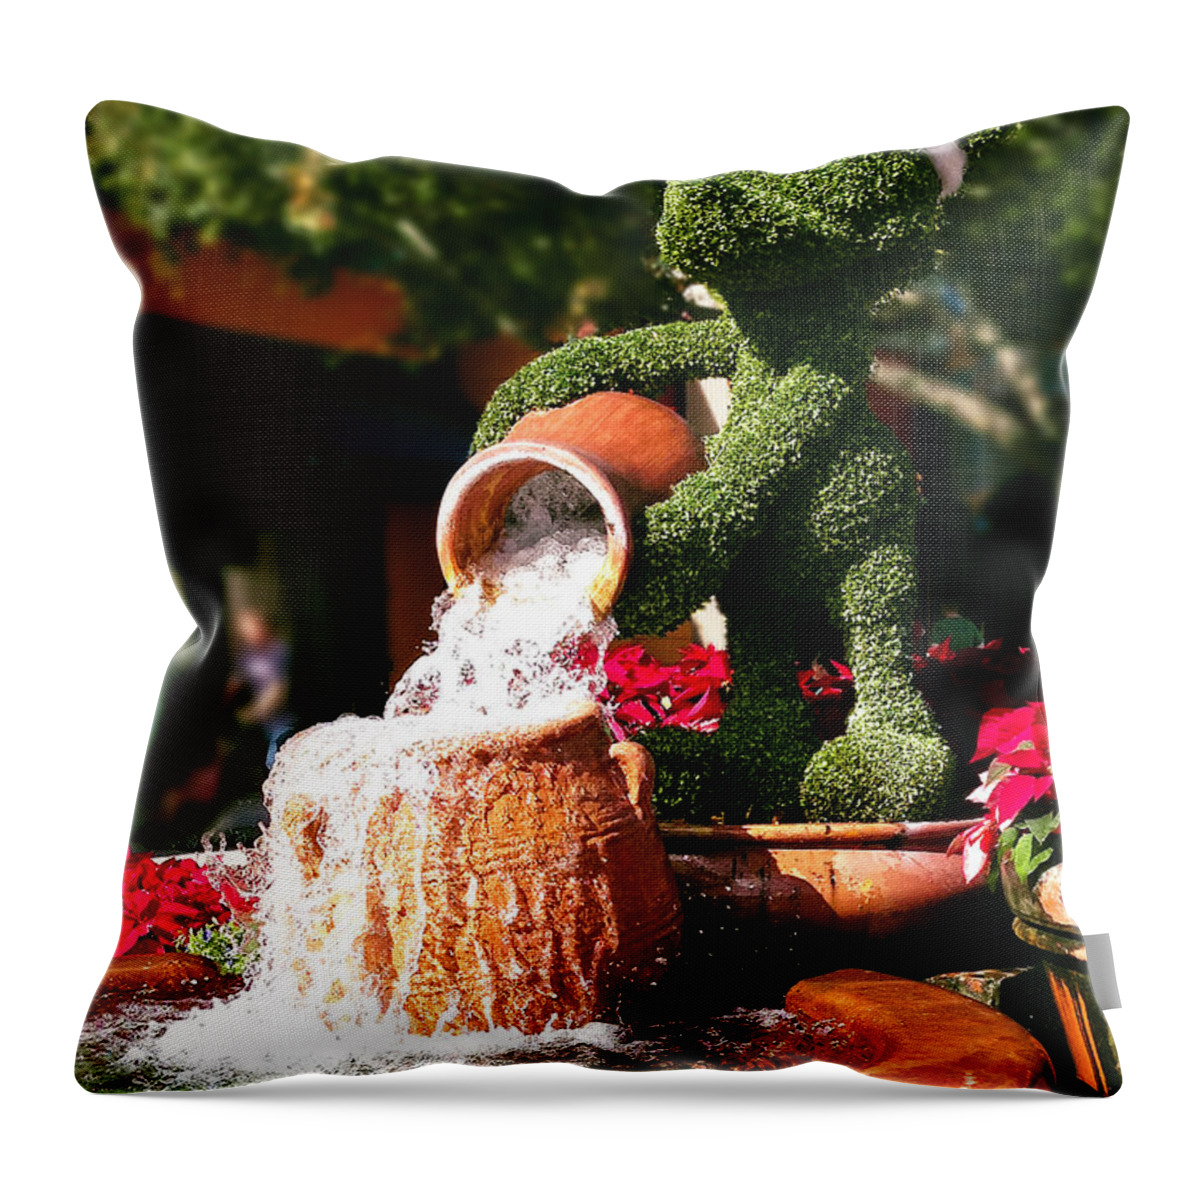 Santa Mickey Topiary Fountain Throw Pillow featuring the photograph Santa Mickey Topiary Fountain by Doug Kreuger